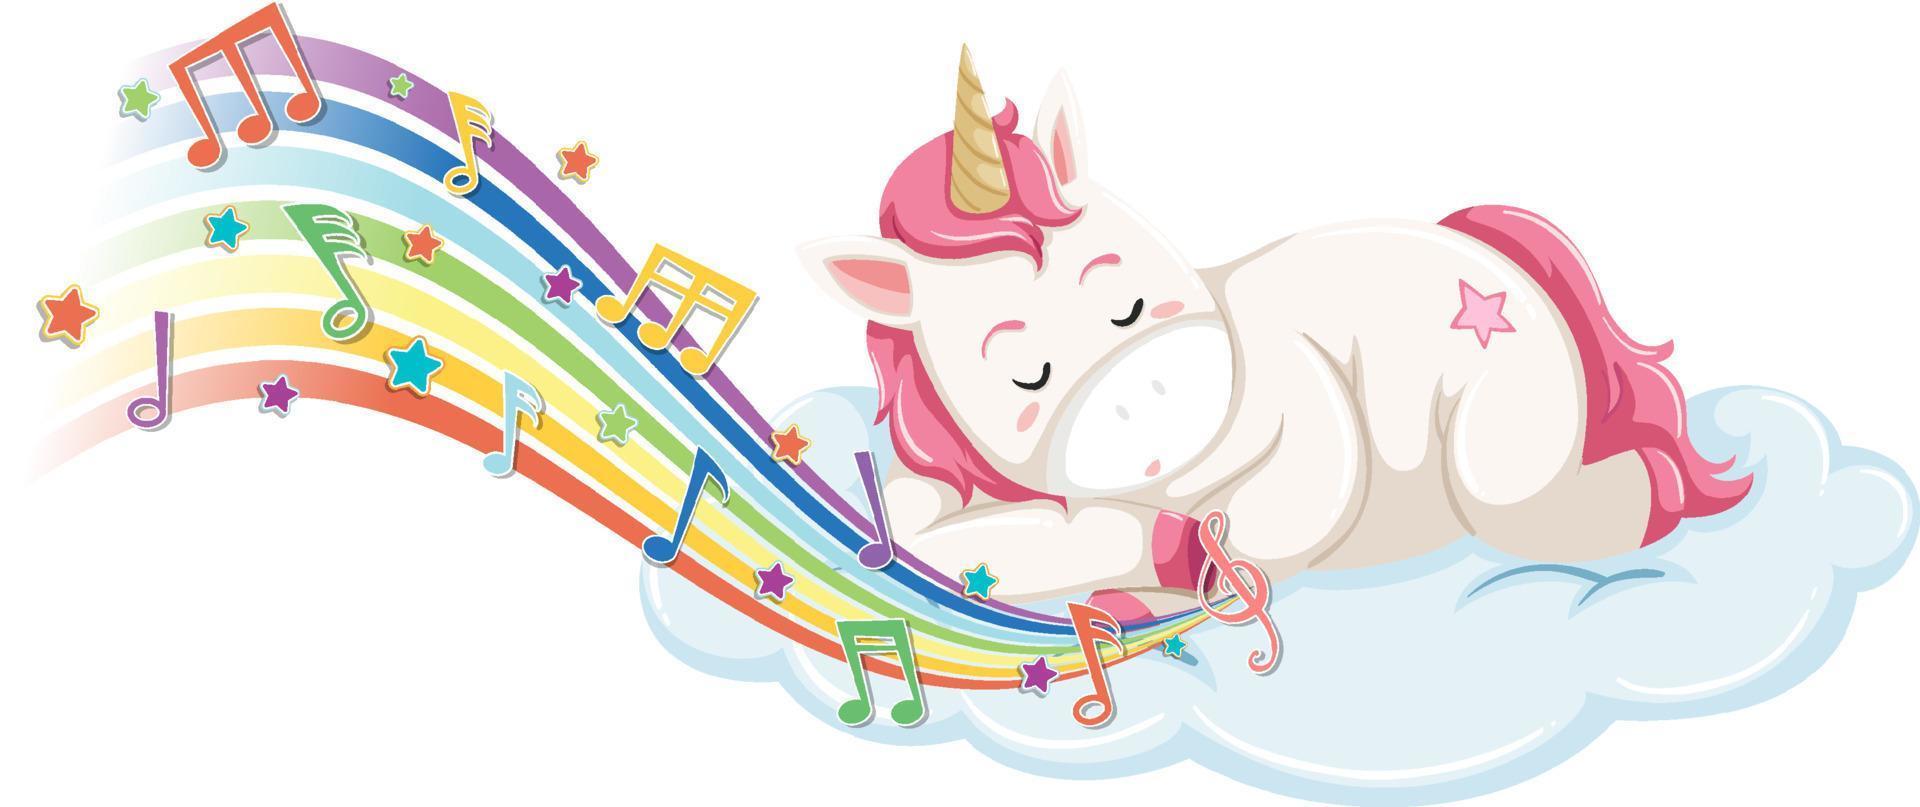 Cute unicorn sleeping on the cloud with melody symbols on rainbow vector